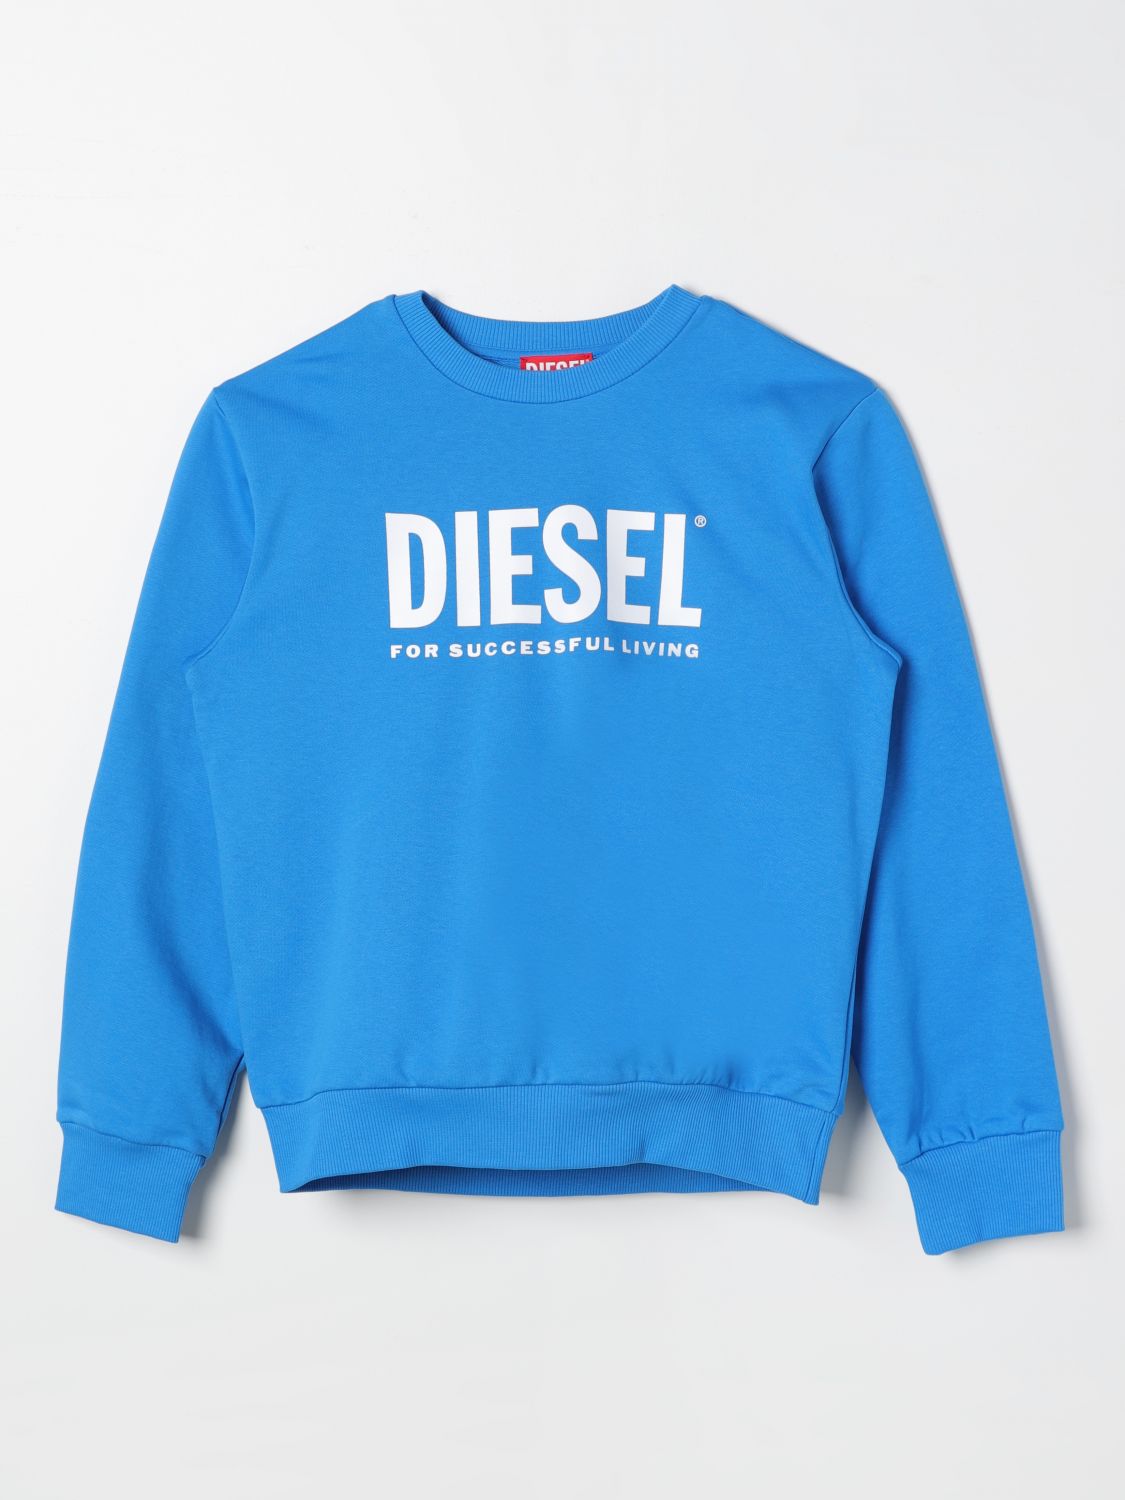 Diesel Sweater  Kids Color Royal Blue